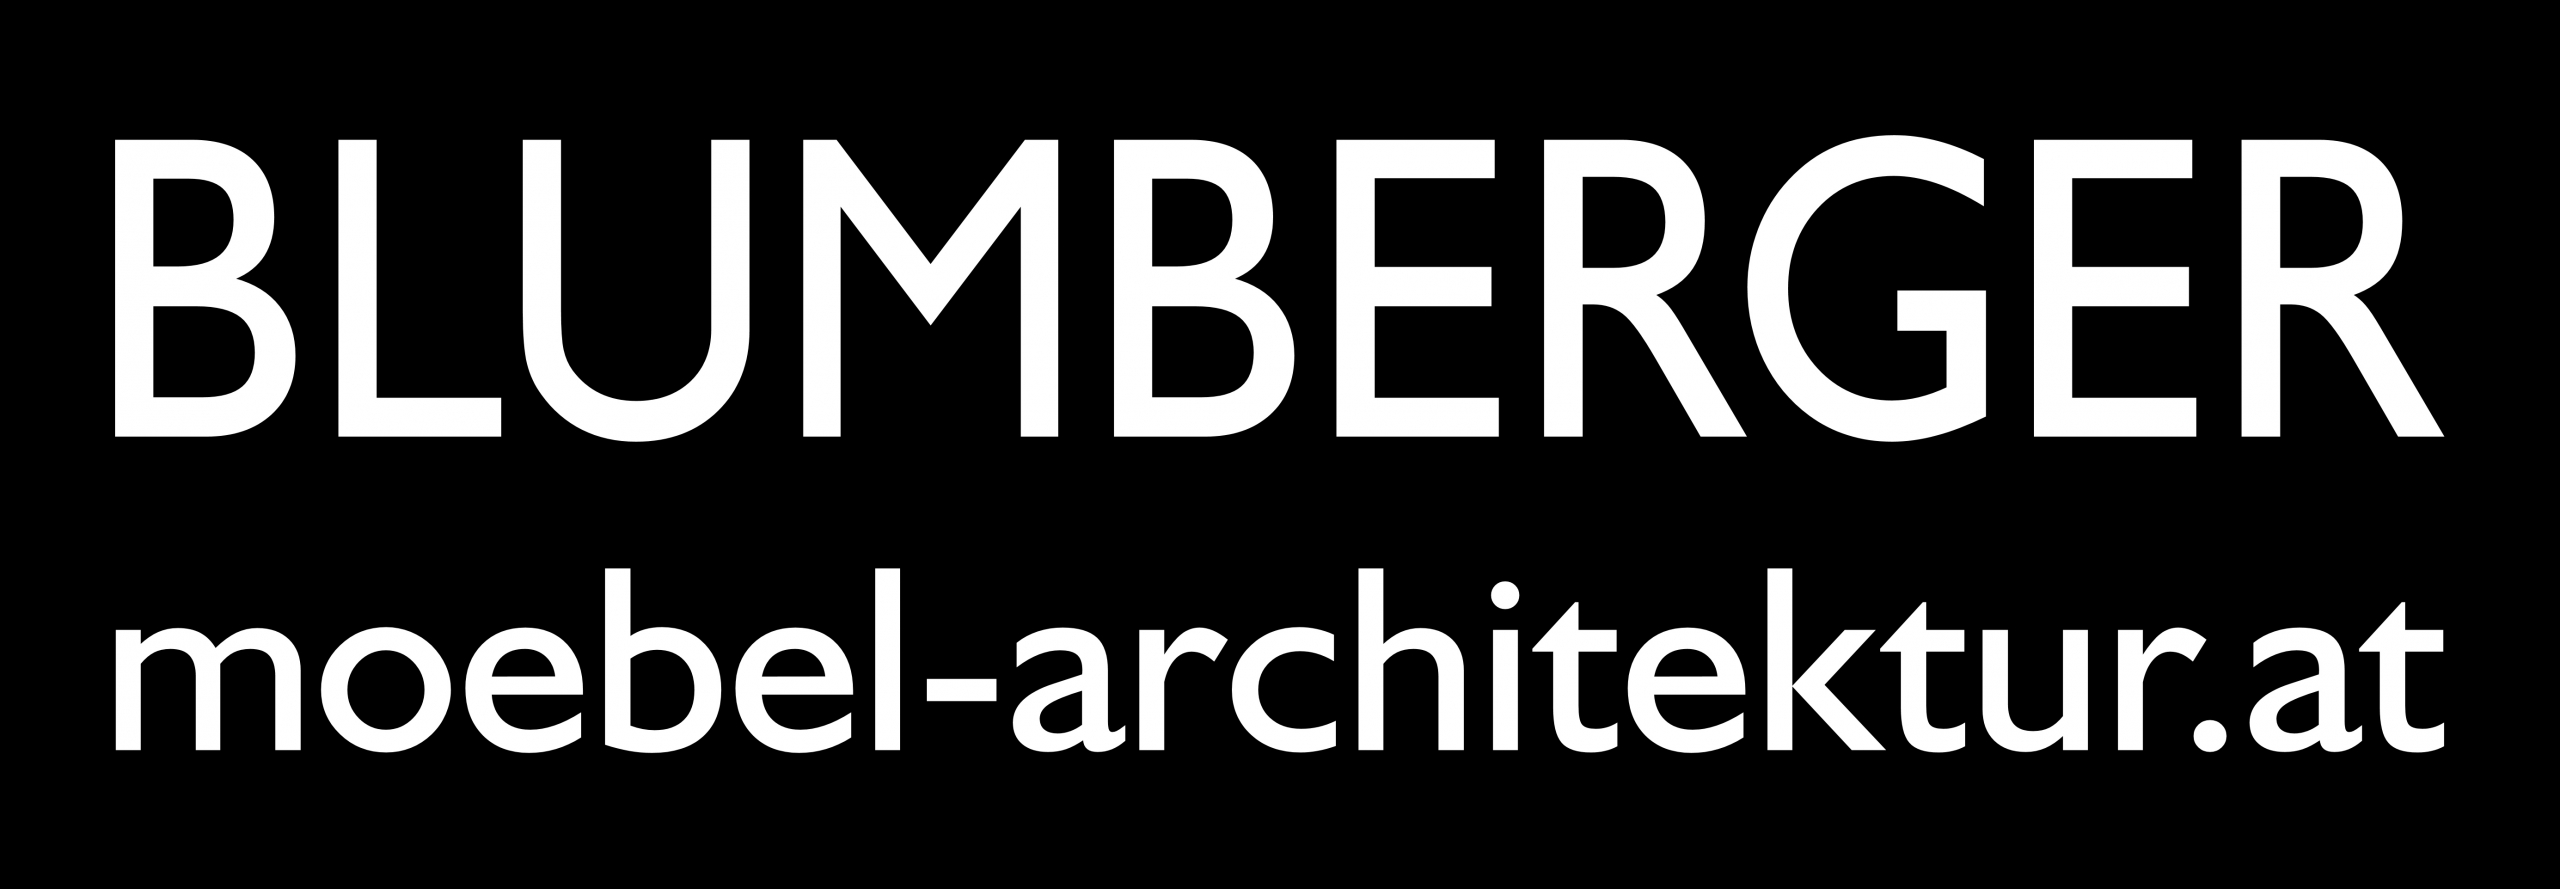 AnnoLIGNUM-BLUMBERGER moebel-architektur